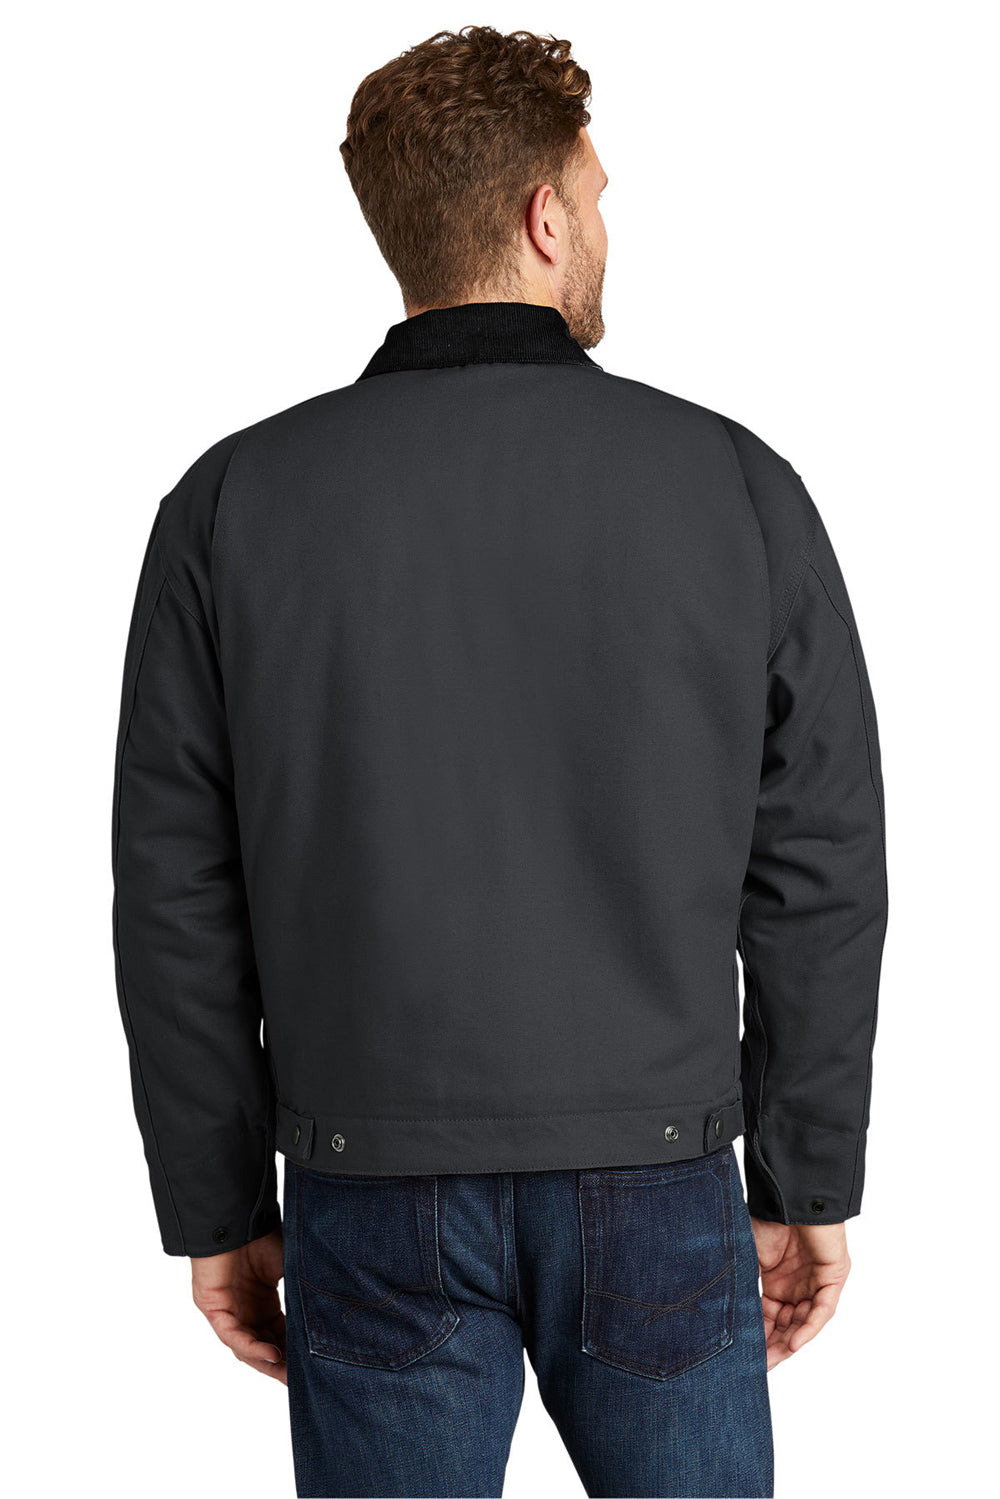 CornerStone J763/TLJ763 Mens Duck Cloth Full Zip Jacket Charcoal Grey Back